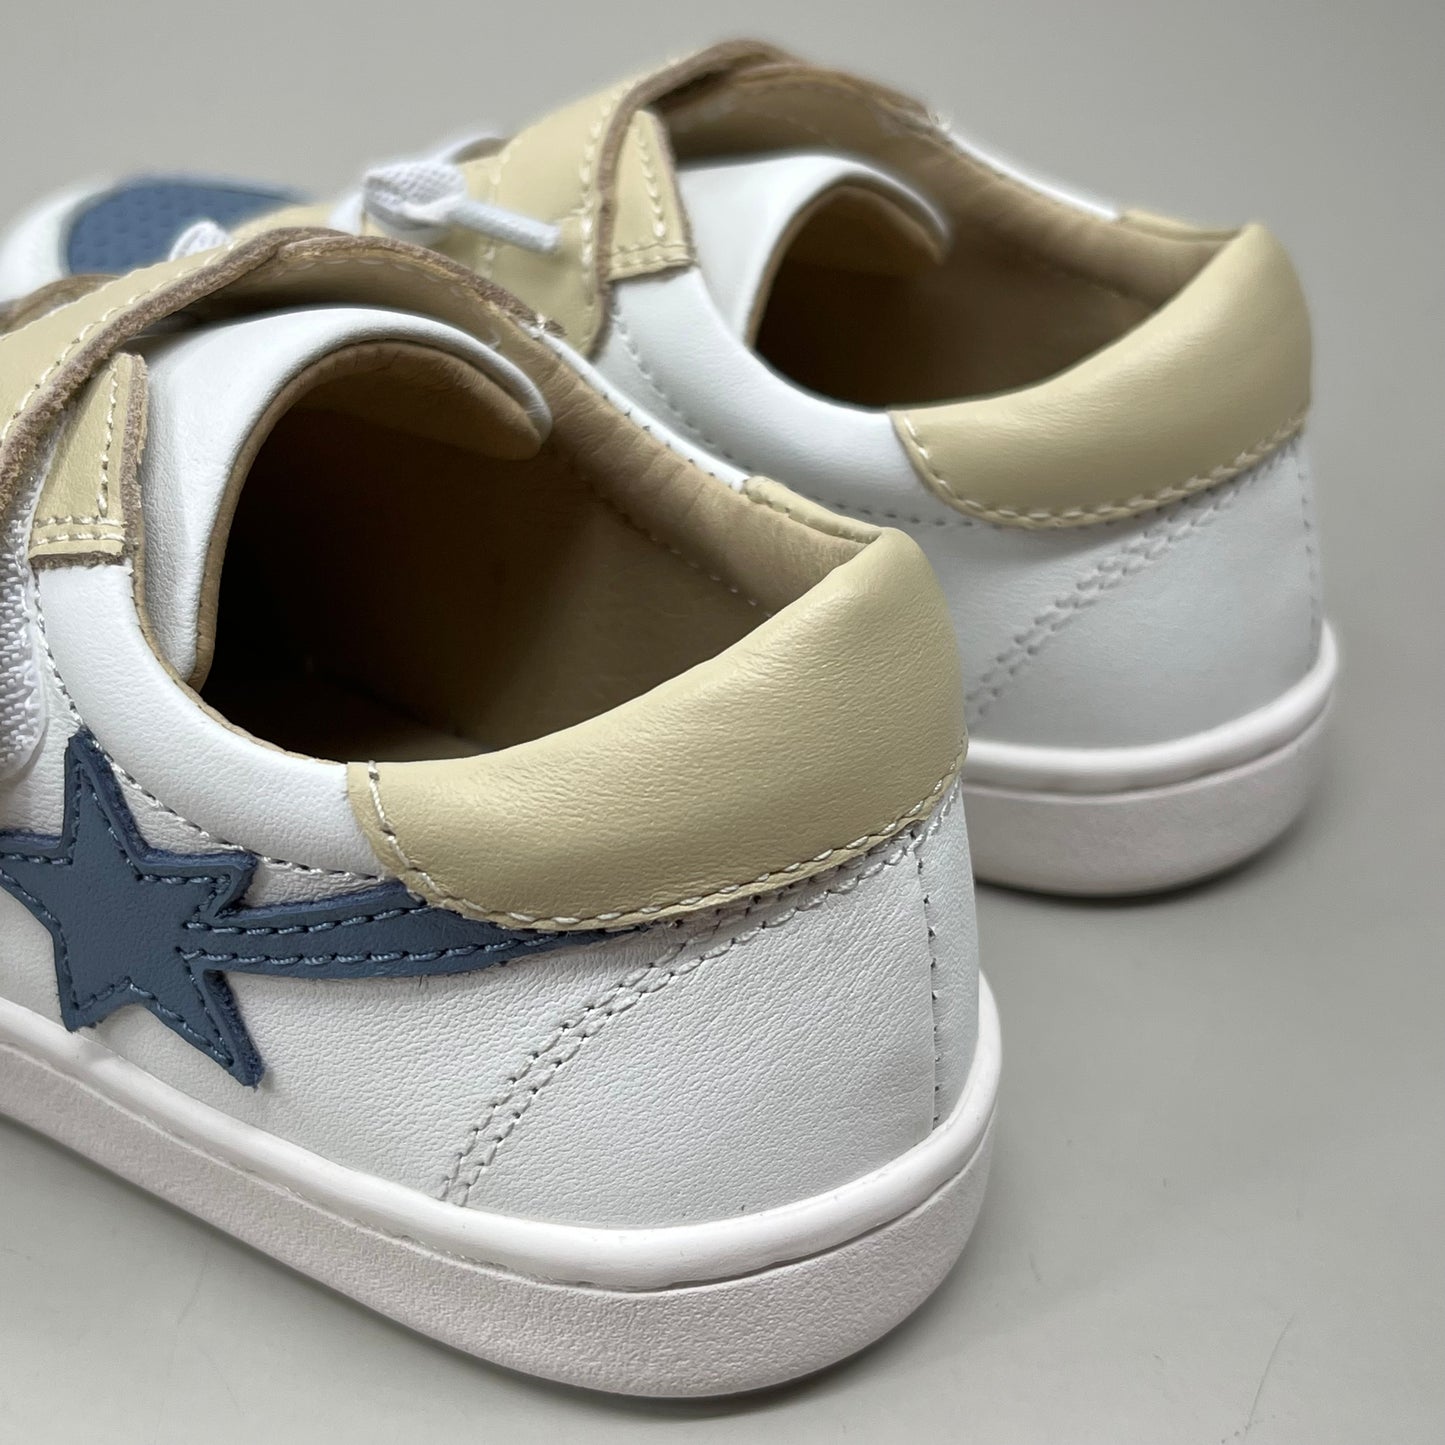 OLD SOLES Runsky Sneakers Leather Shoe Kid’s Sz 27 US 10 Cream/Indigo/Snow #6135